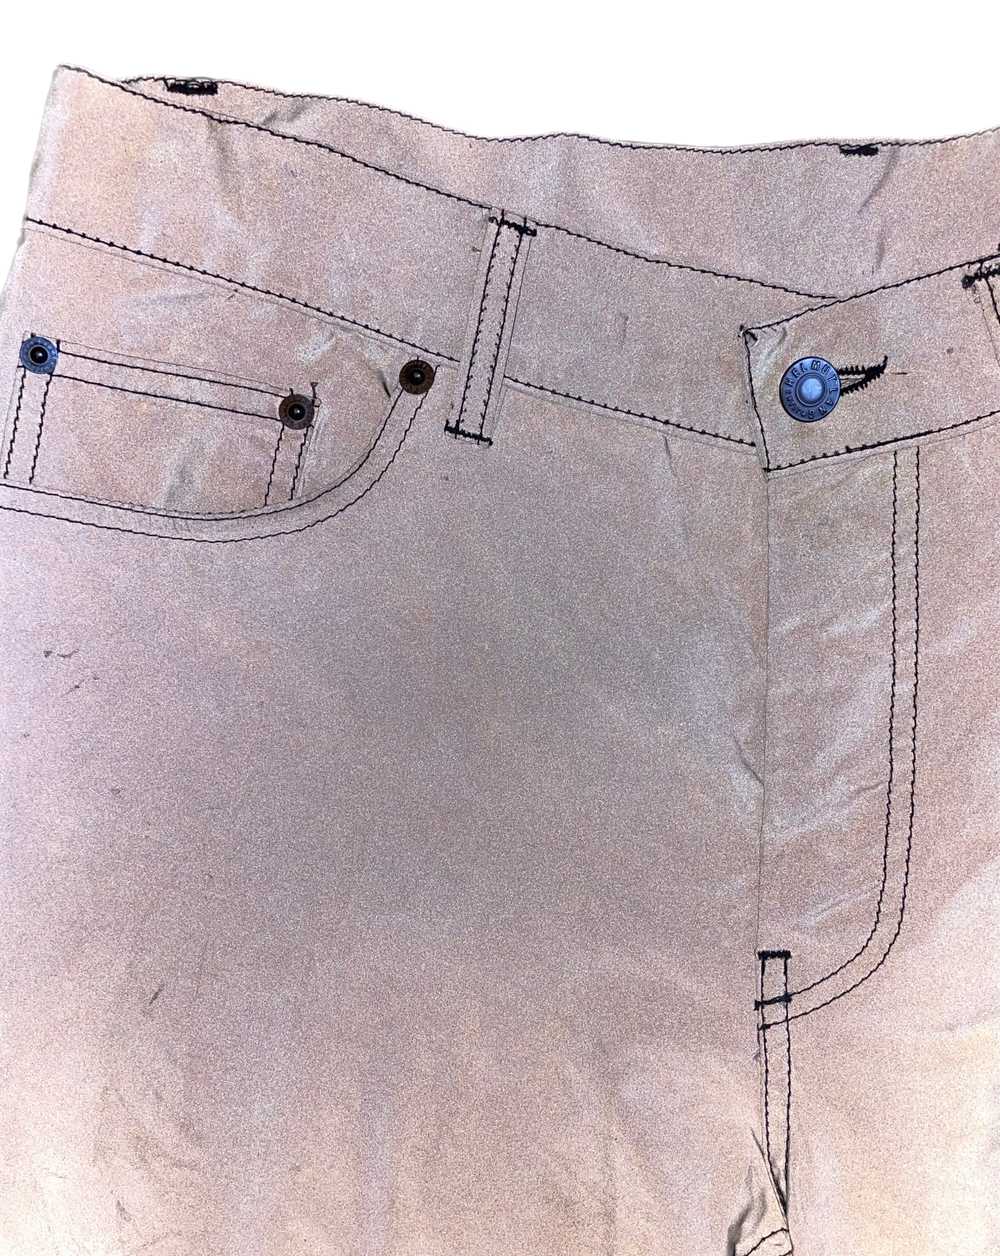 S/S 1997 Helmut Lang Reflective Pants - image 3